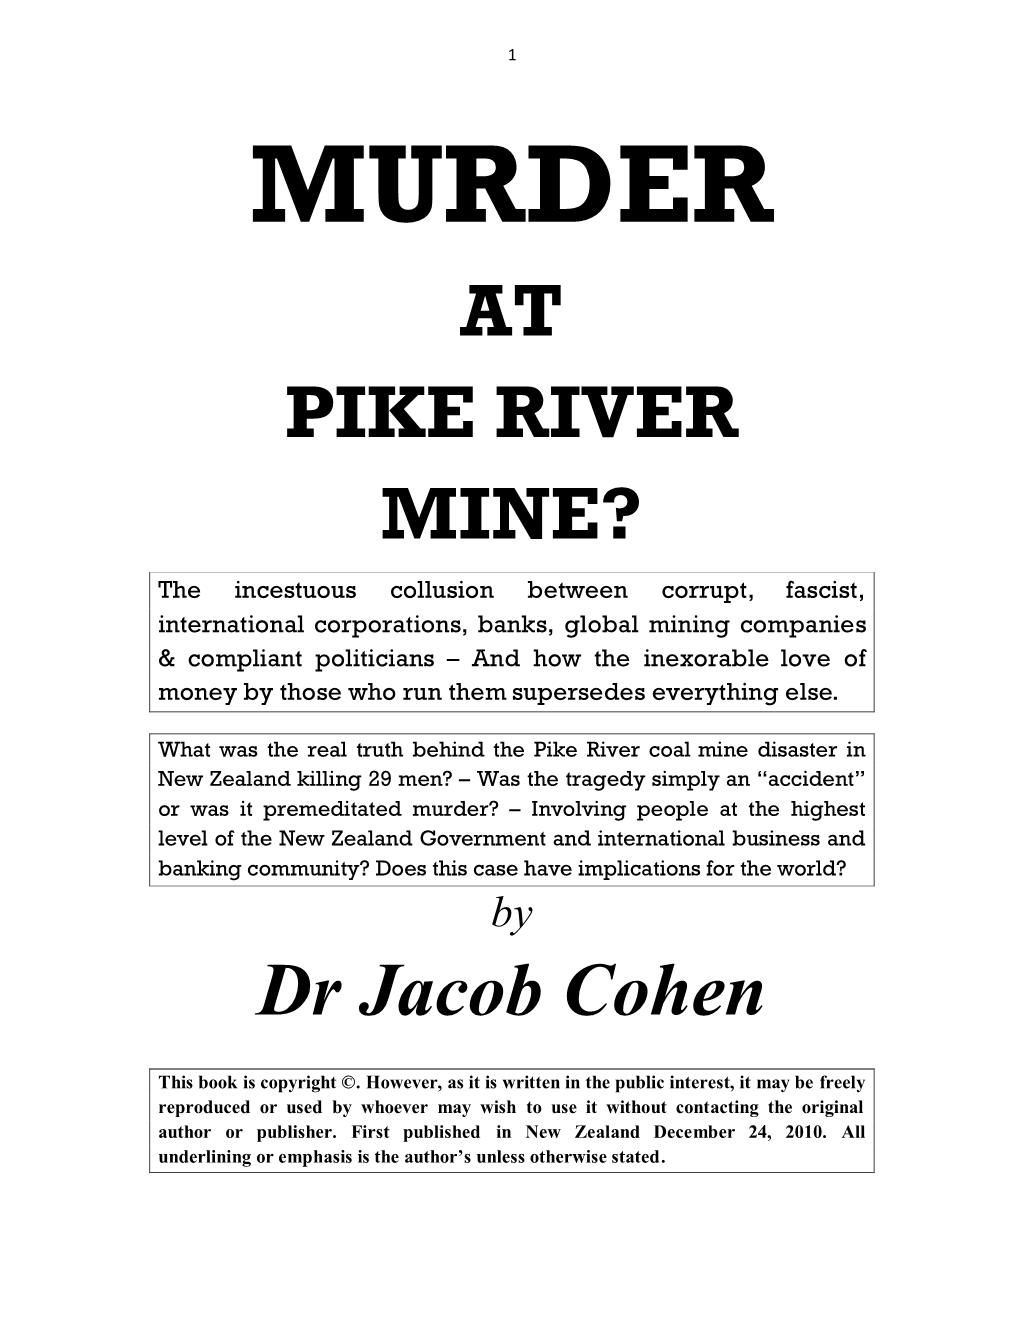 Murder at Pike River Mine?